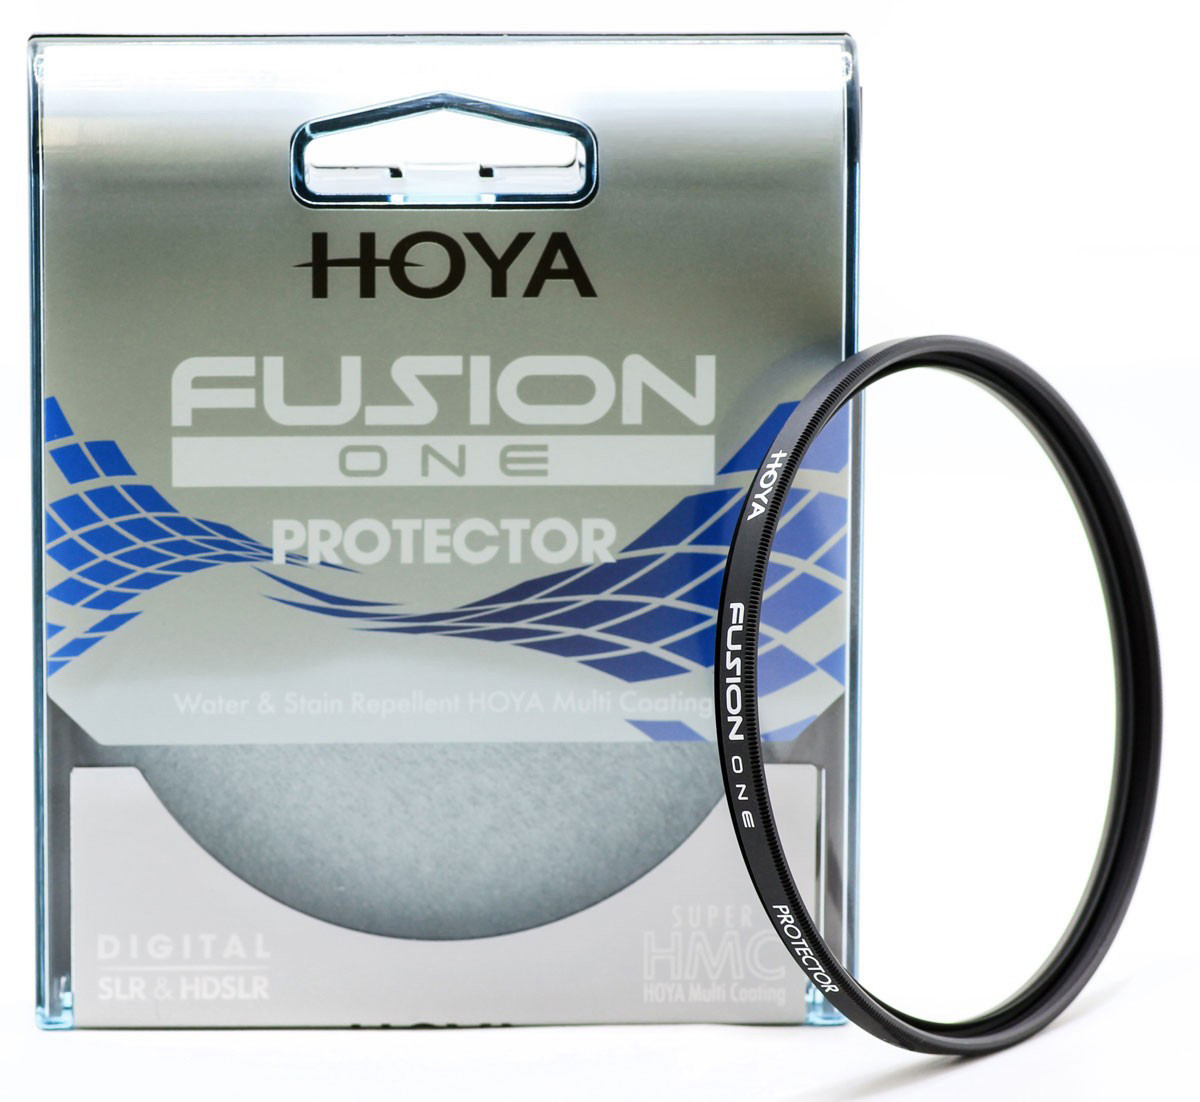 Hoya Fusion One 43mm